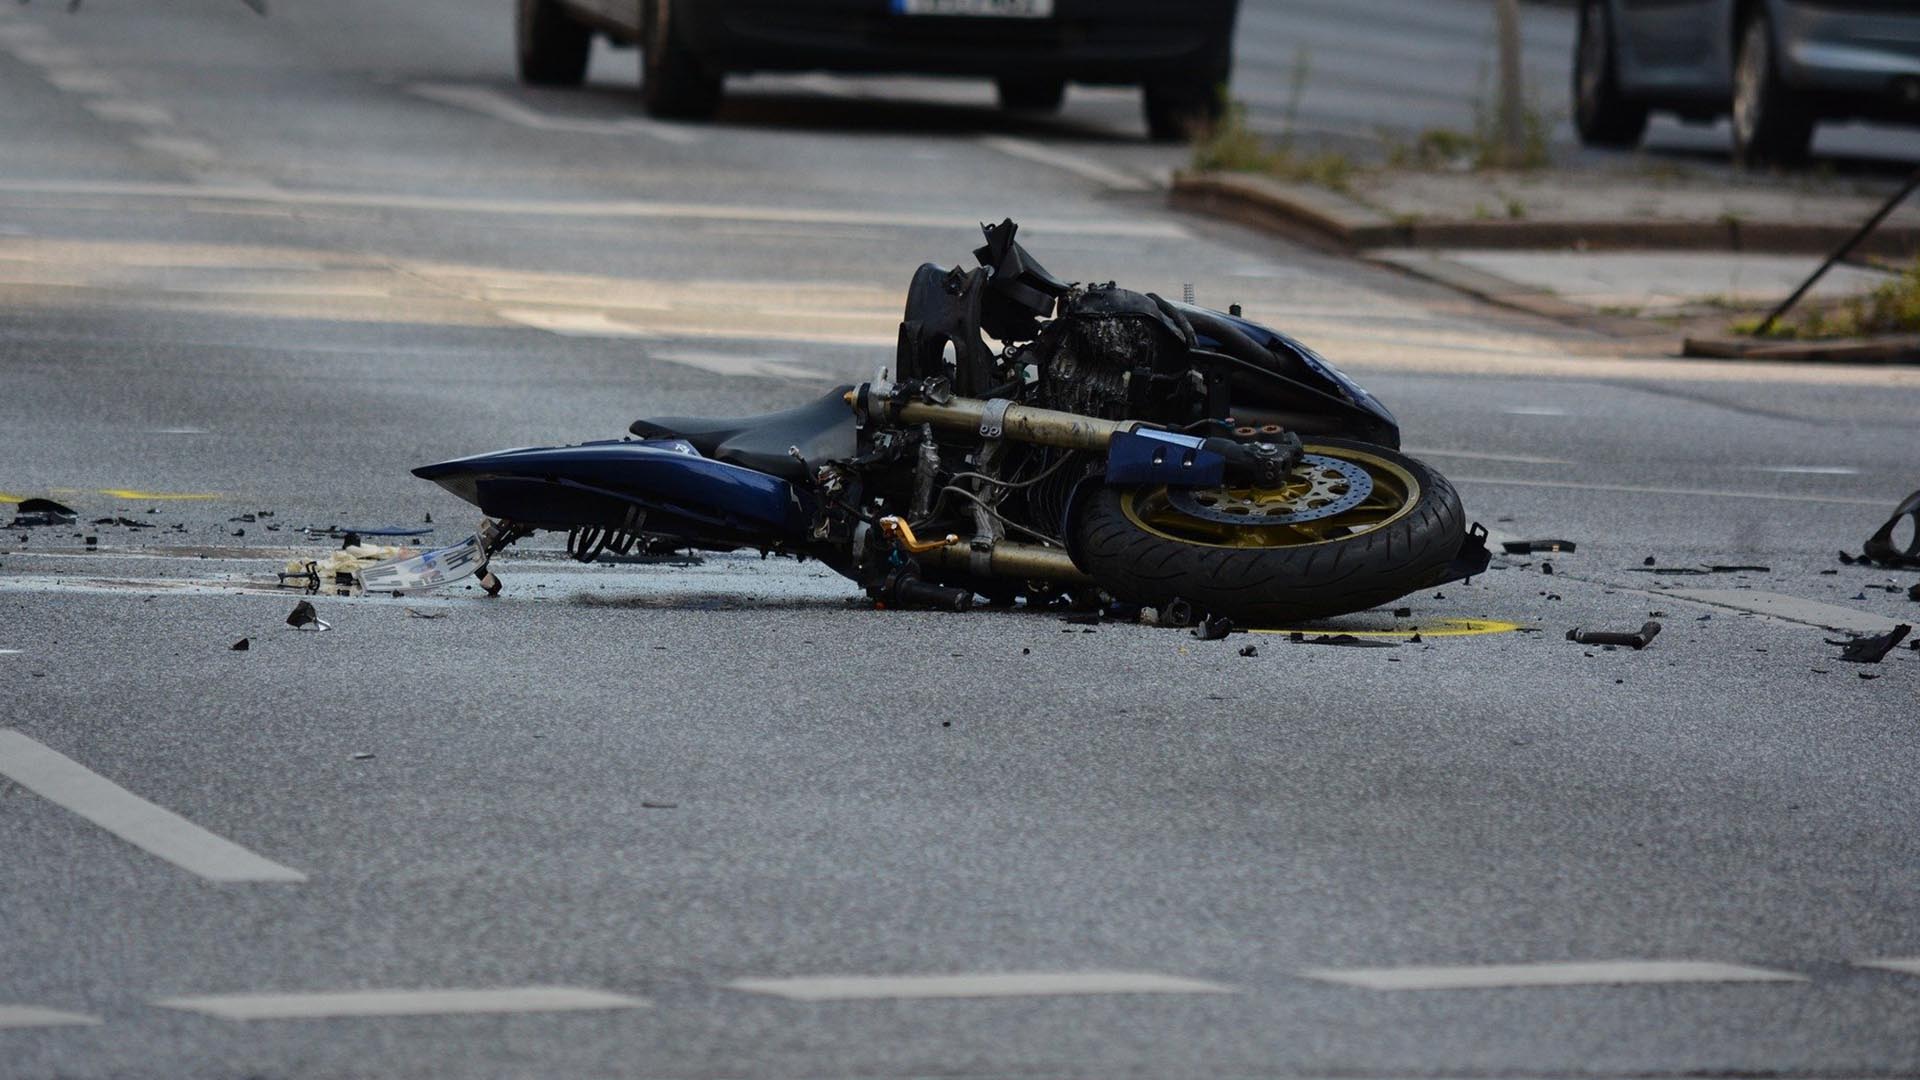 moto destrozada en carretera